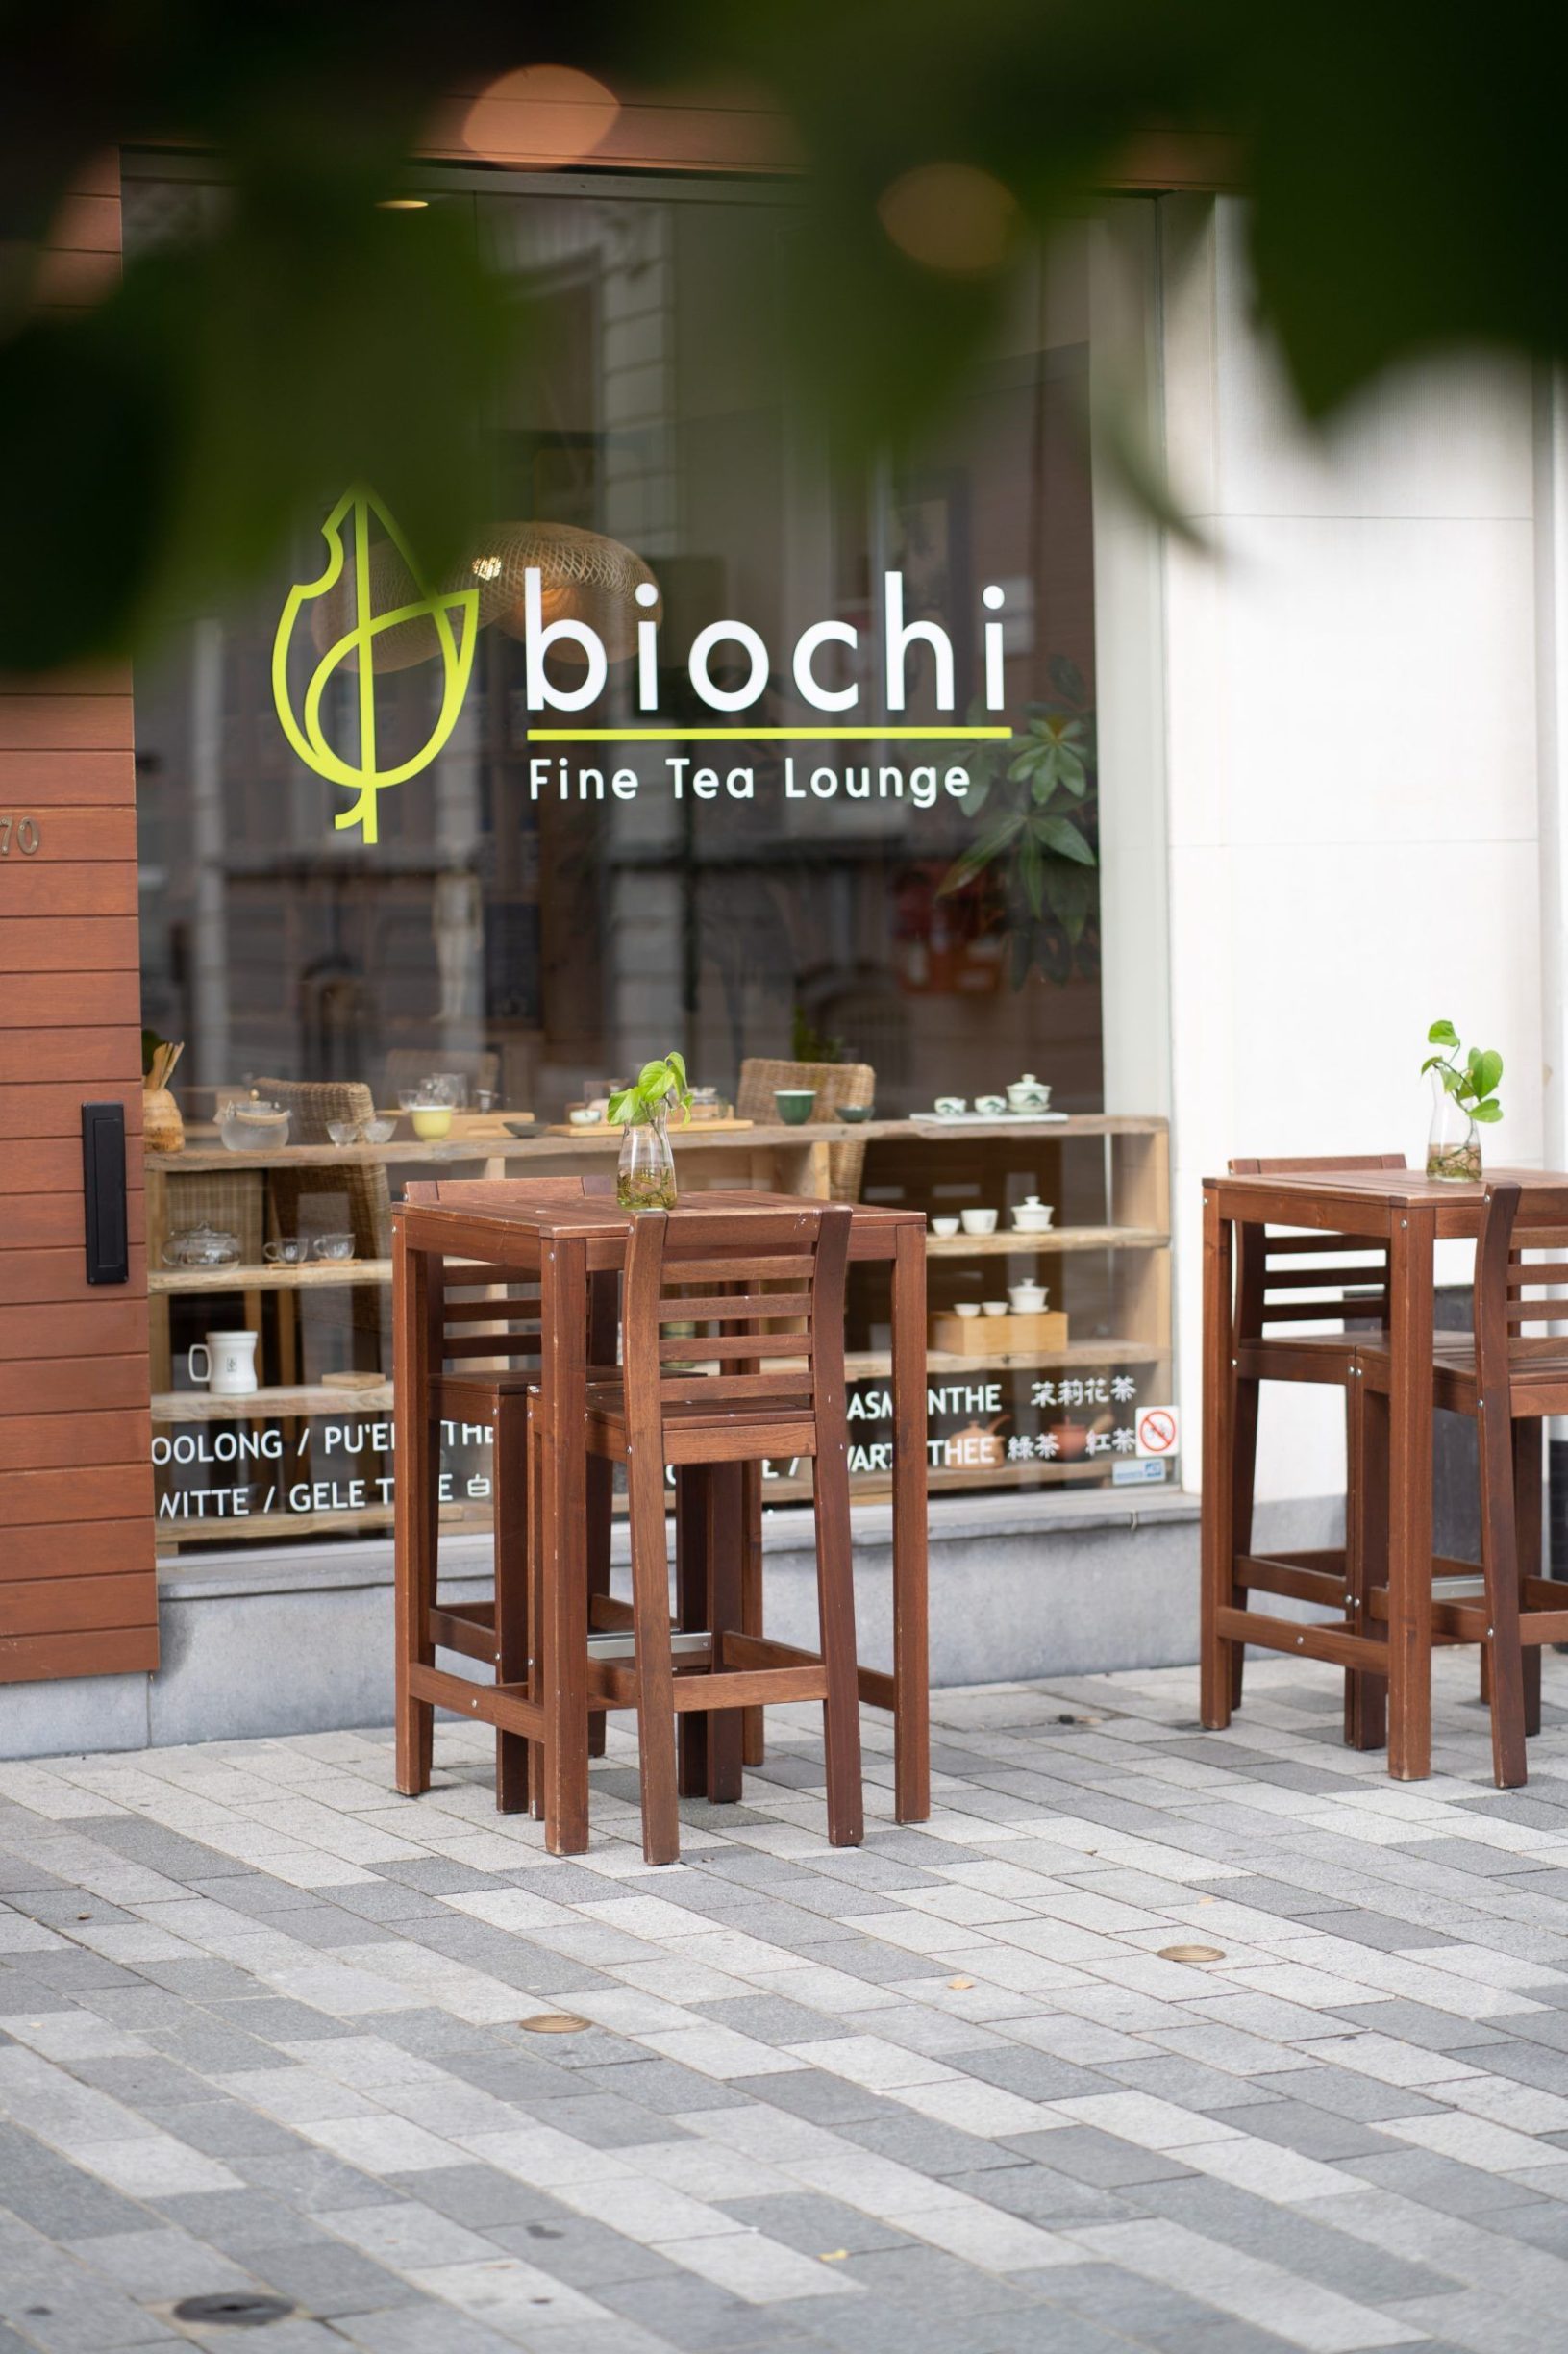 biochi Tea Lounge